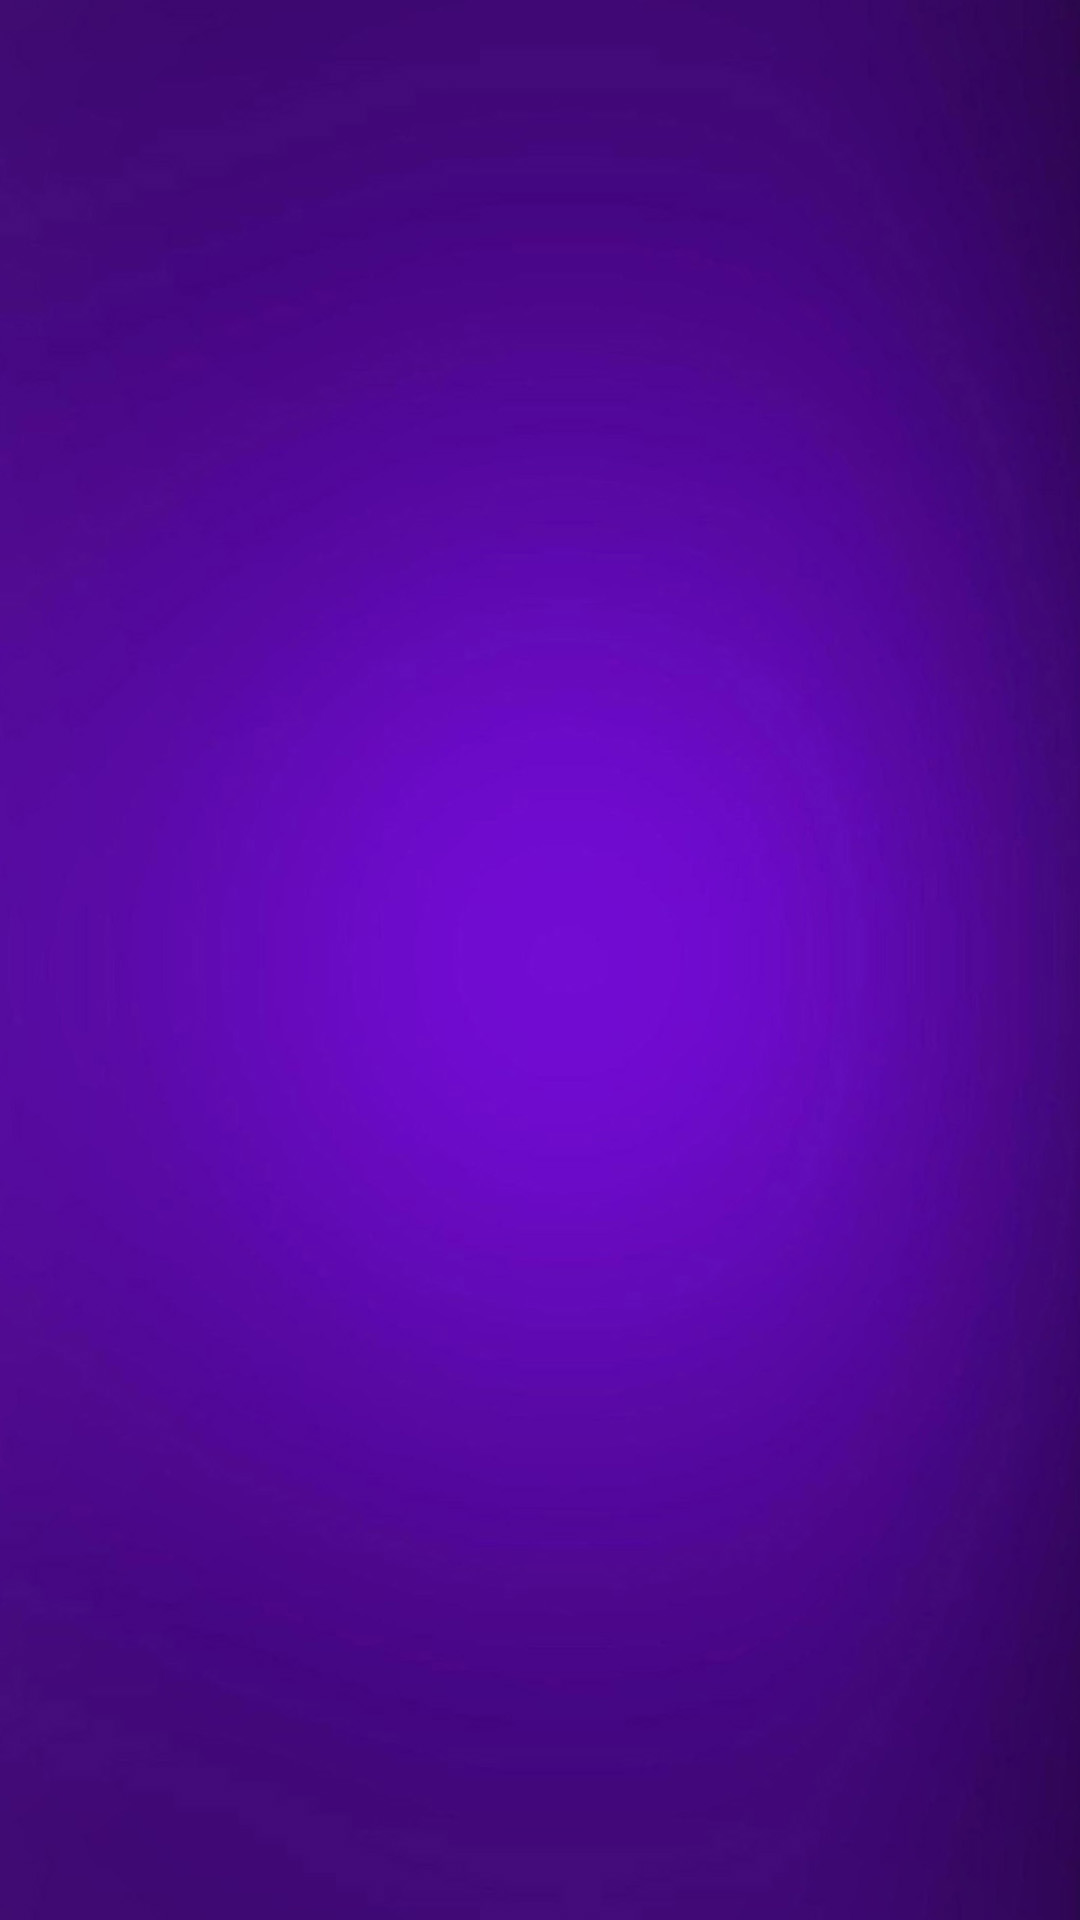 Purple Plain Iphone Wallpapers